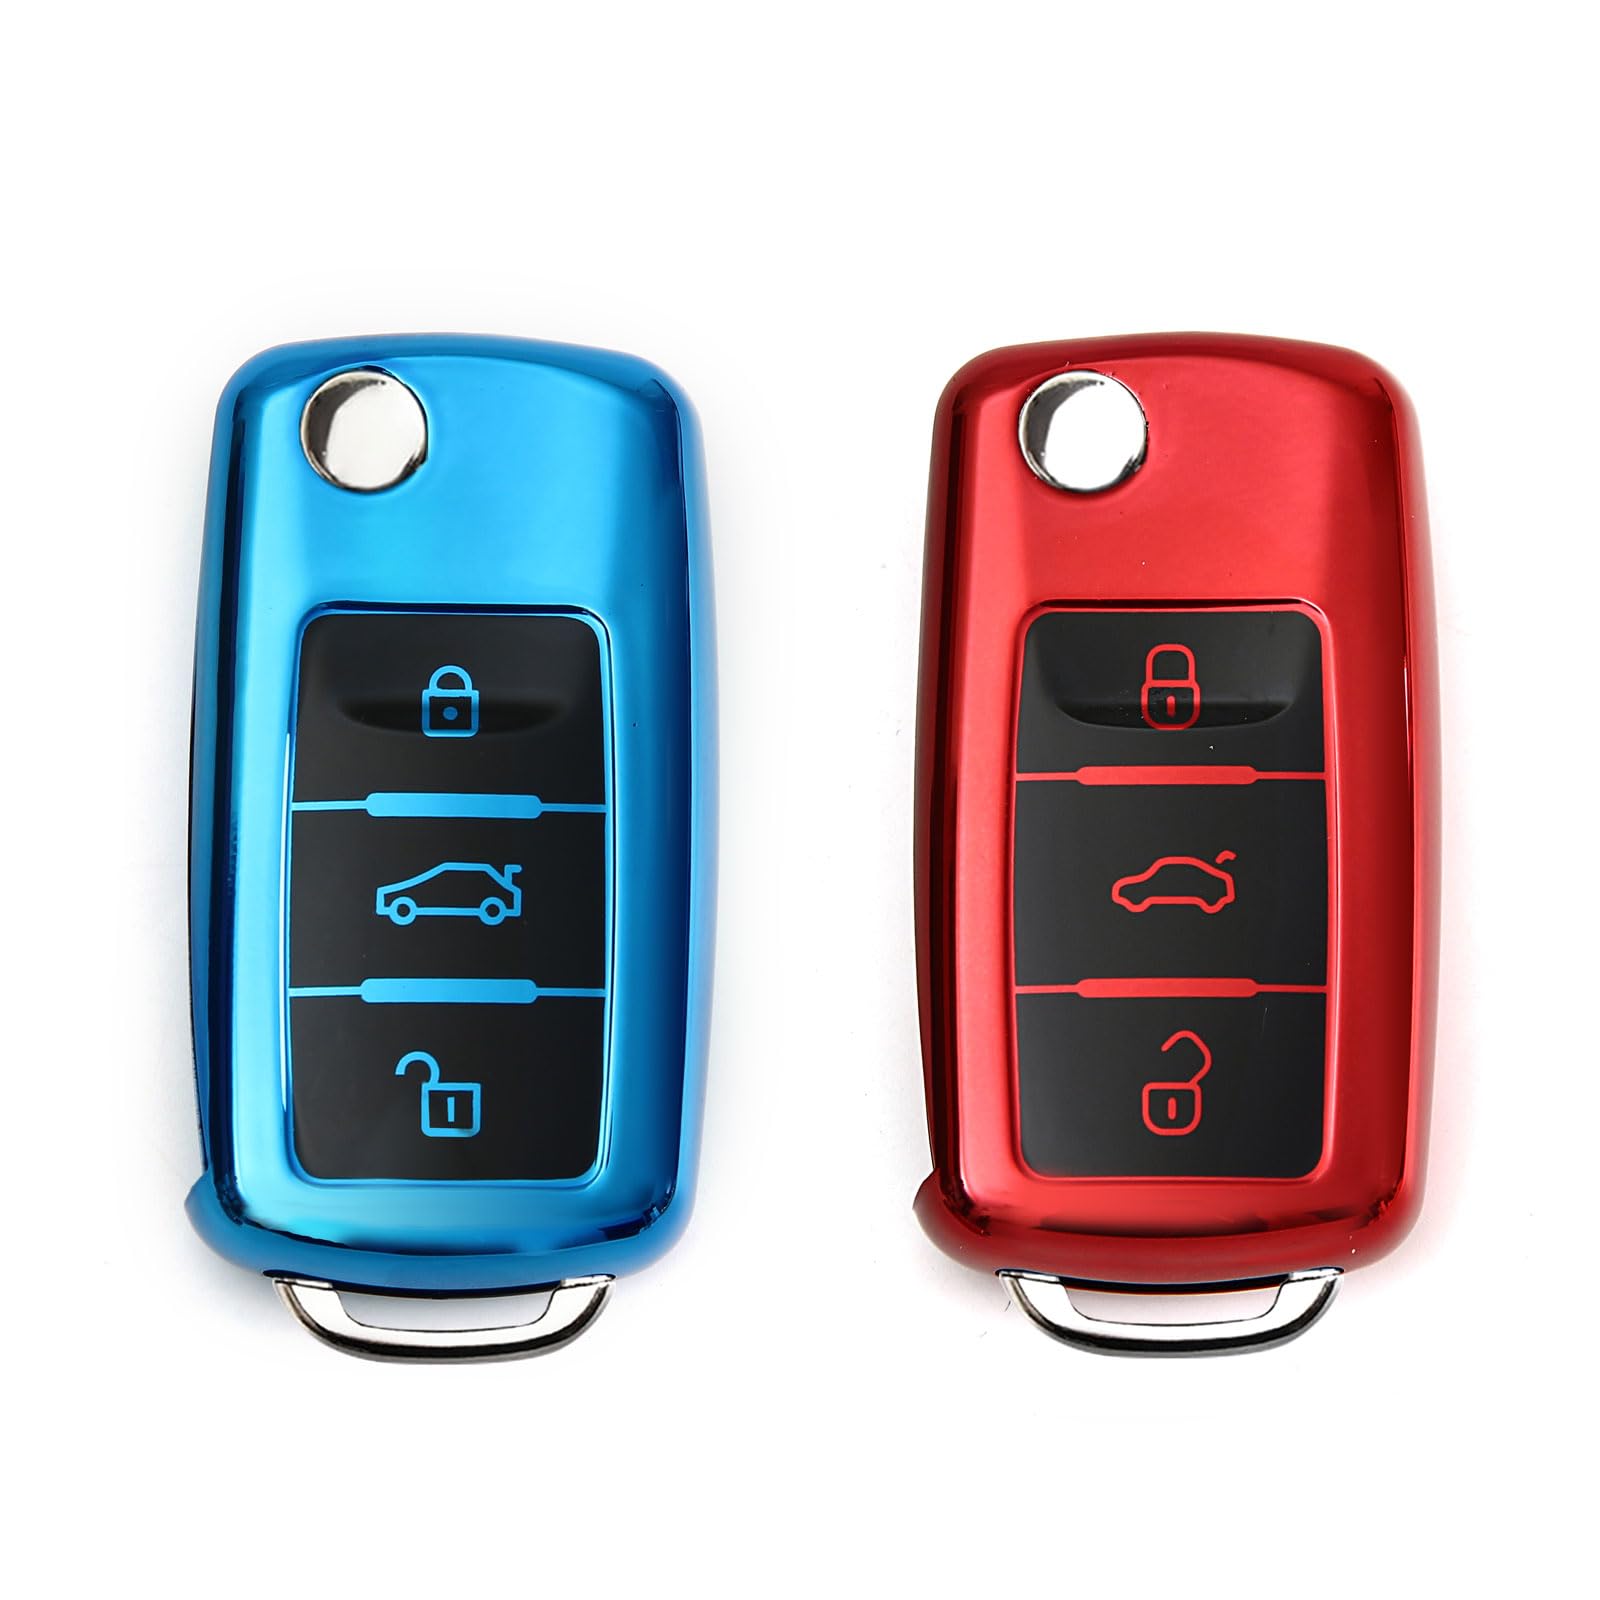 2 Stück Autoschlüssel Hülle, Schlüsselbox ,Autoschlüssel Schutzhülle kompatibel mit VW Golf 7、Polo、Tiguan、Skoda 3-Tasten Schlüsselhülle (Blau + Rot) von Mythosurge